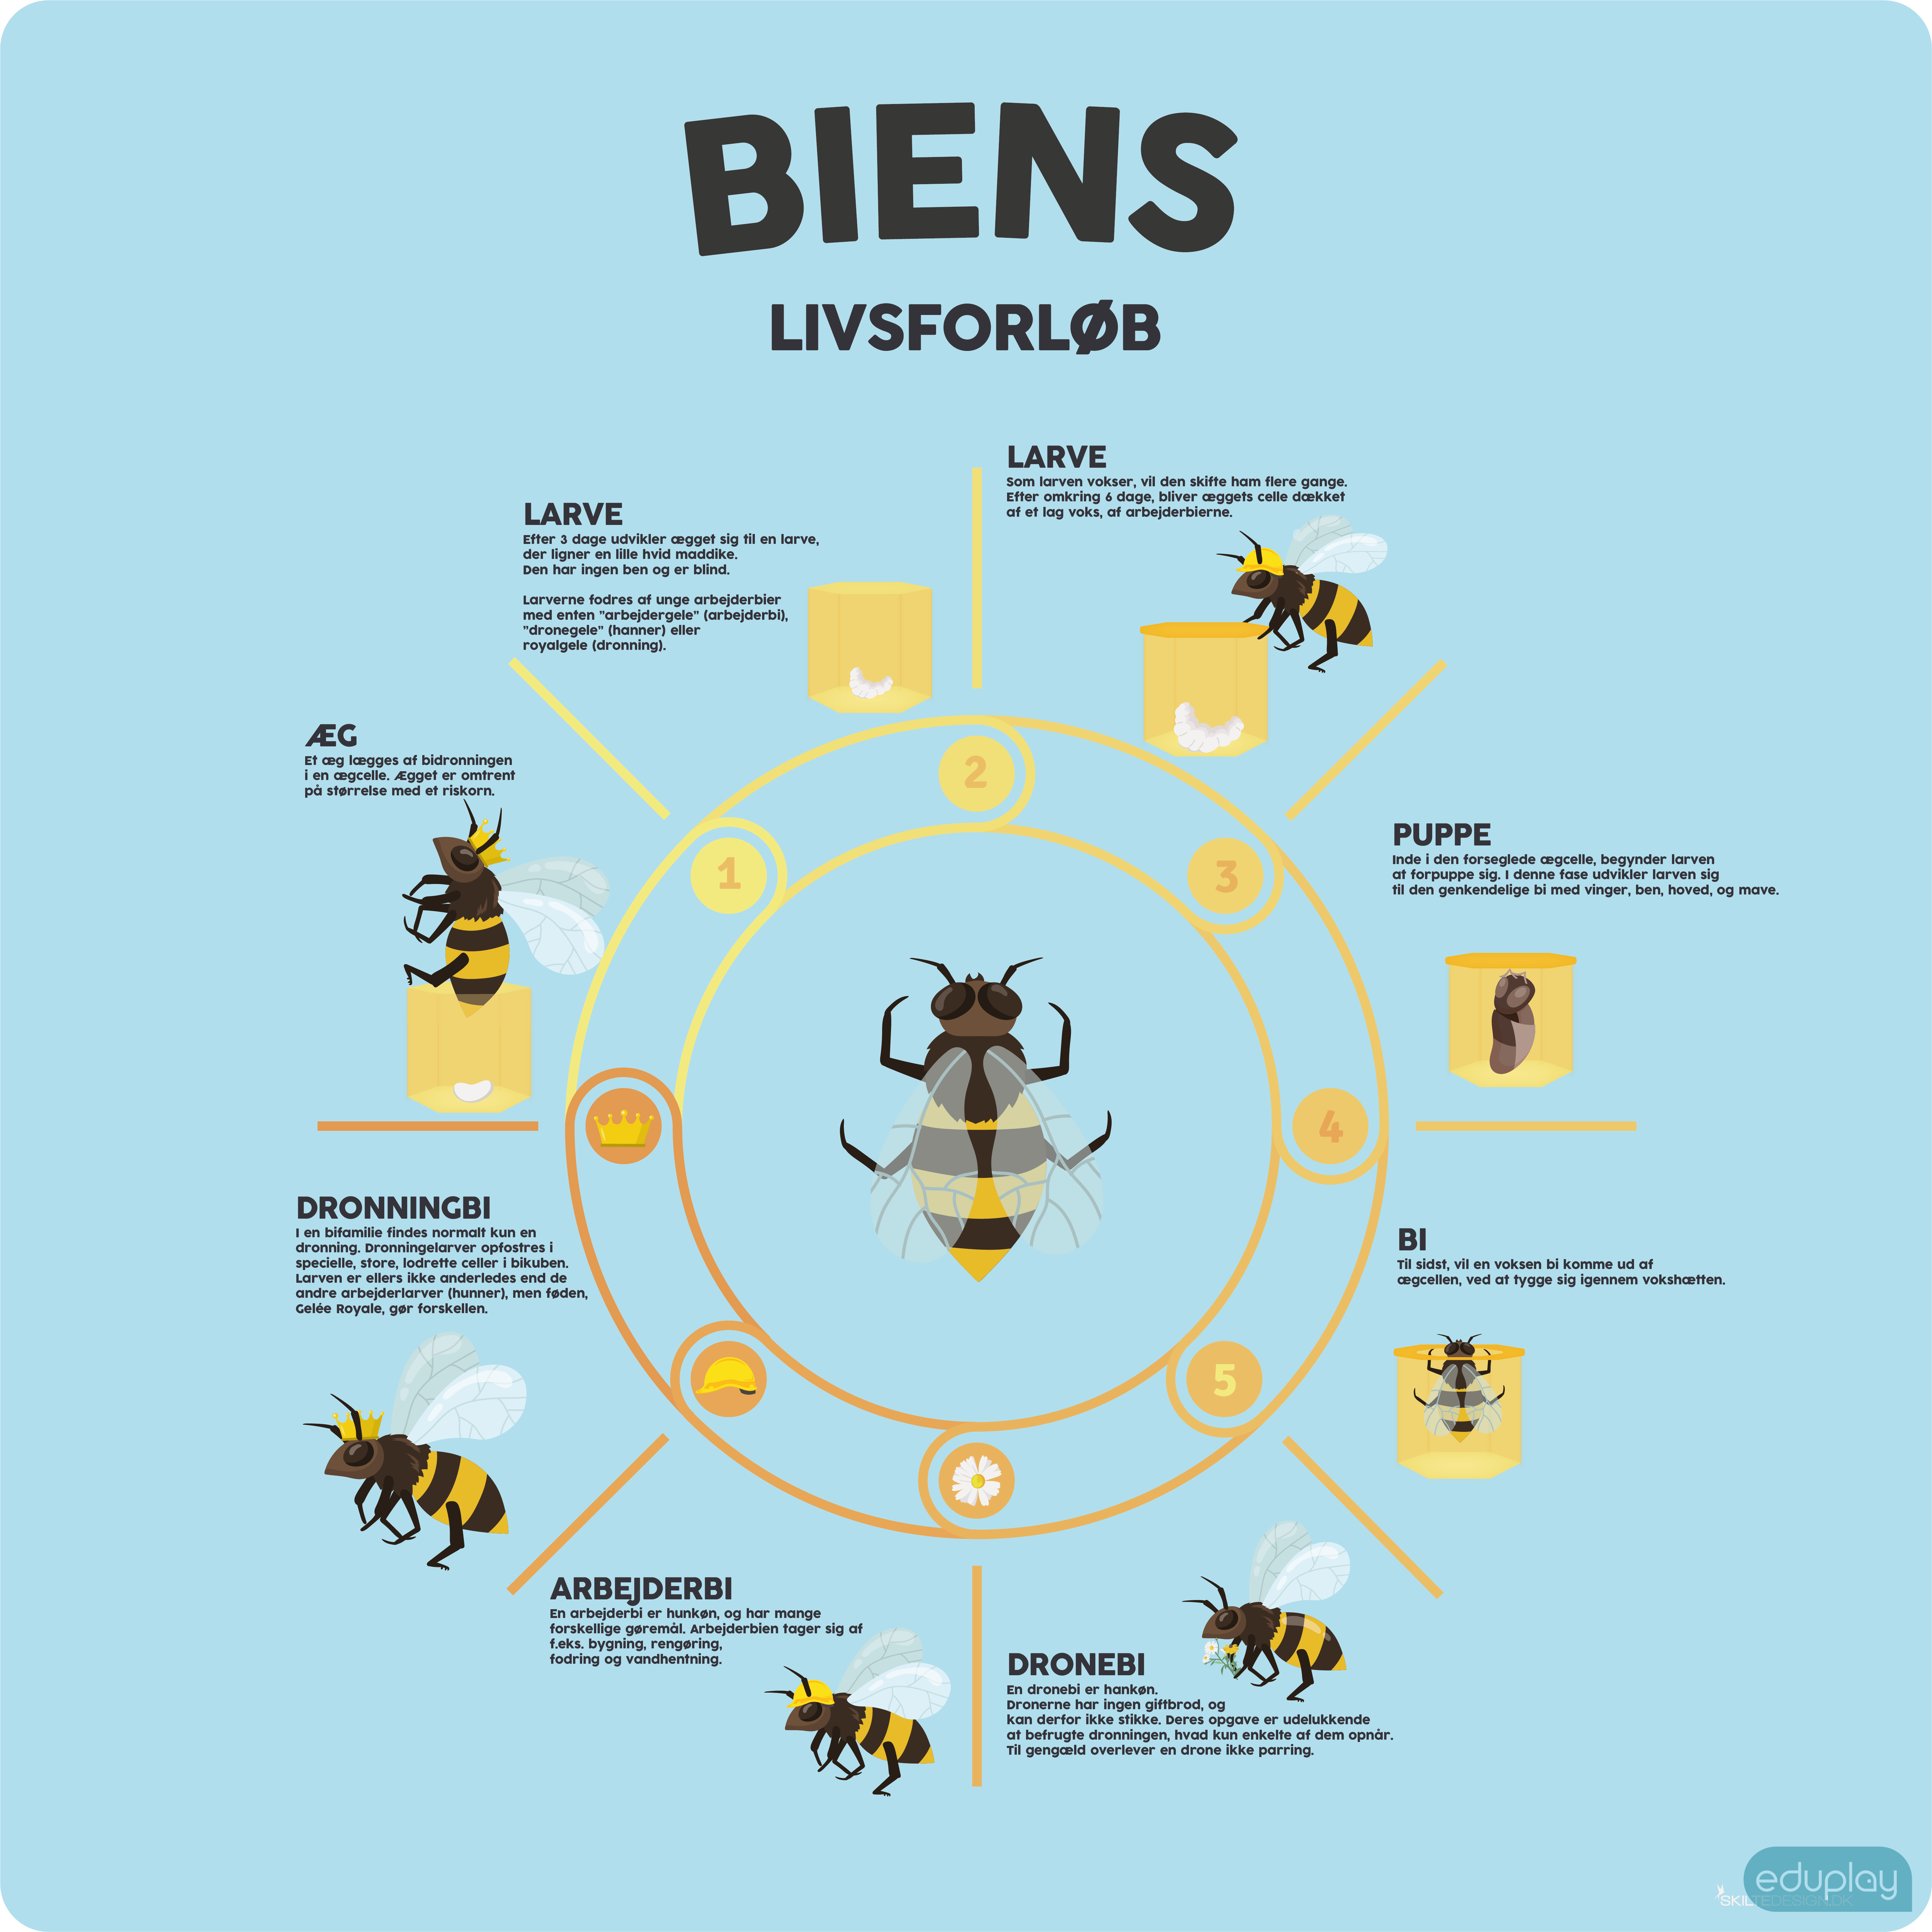 Biens livsforlb